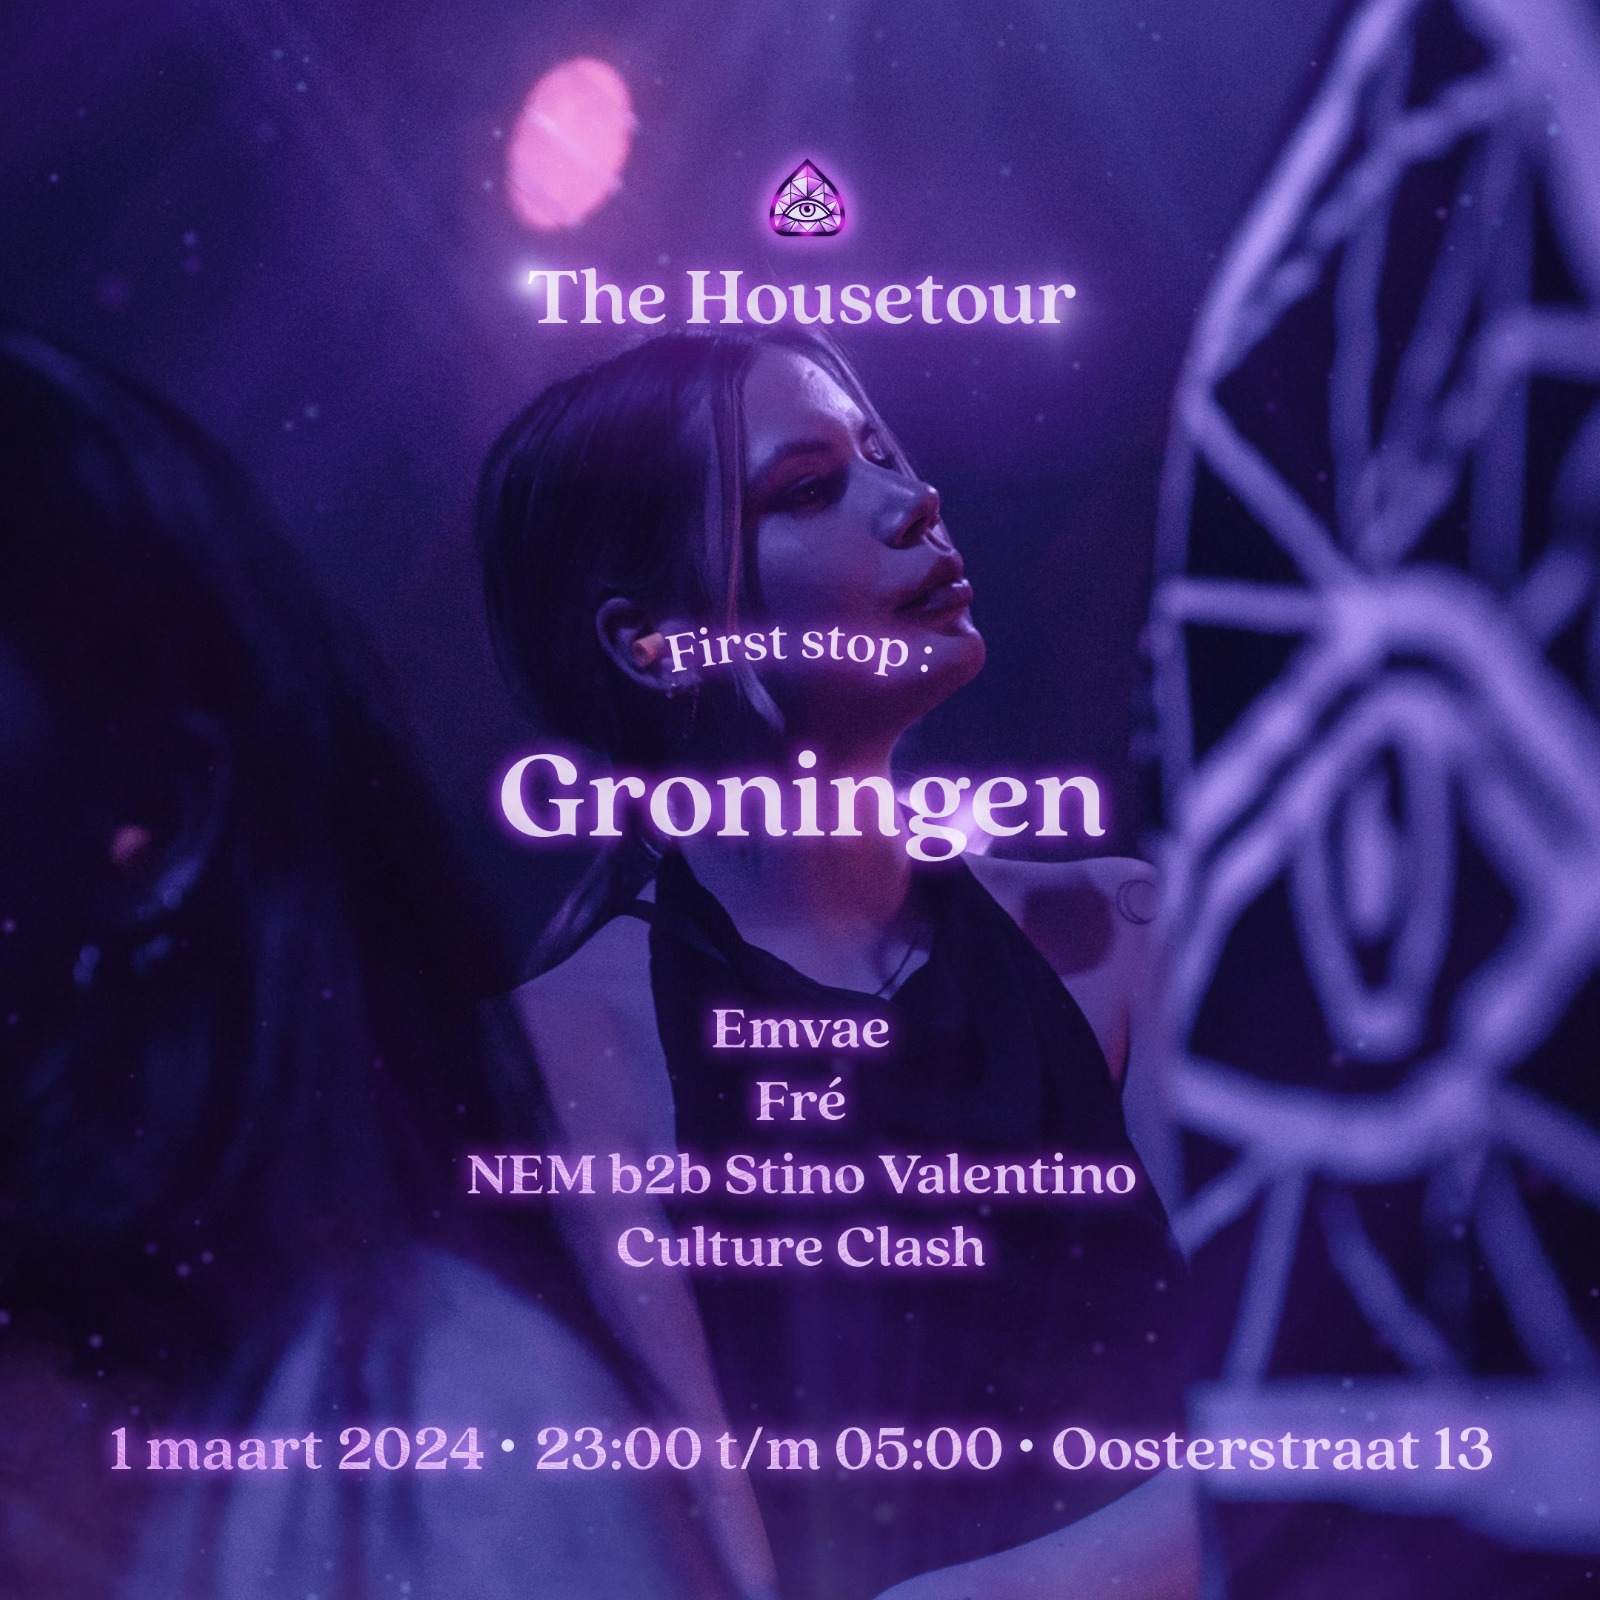 The Housetour - Groningen with Fre, Nem, Emvae & Stino Valentino - Página frontal